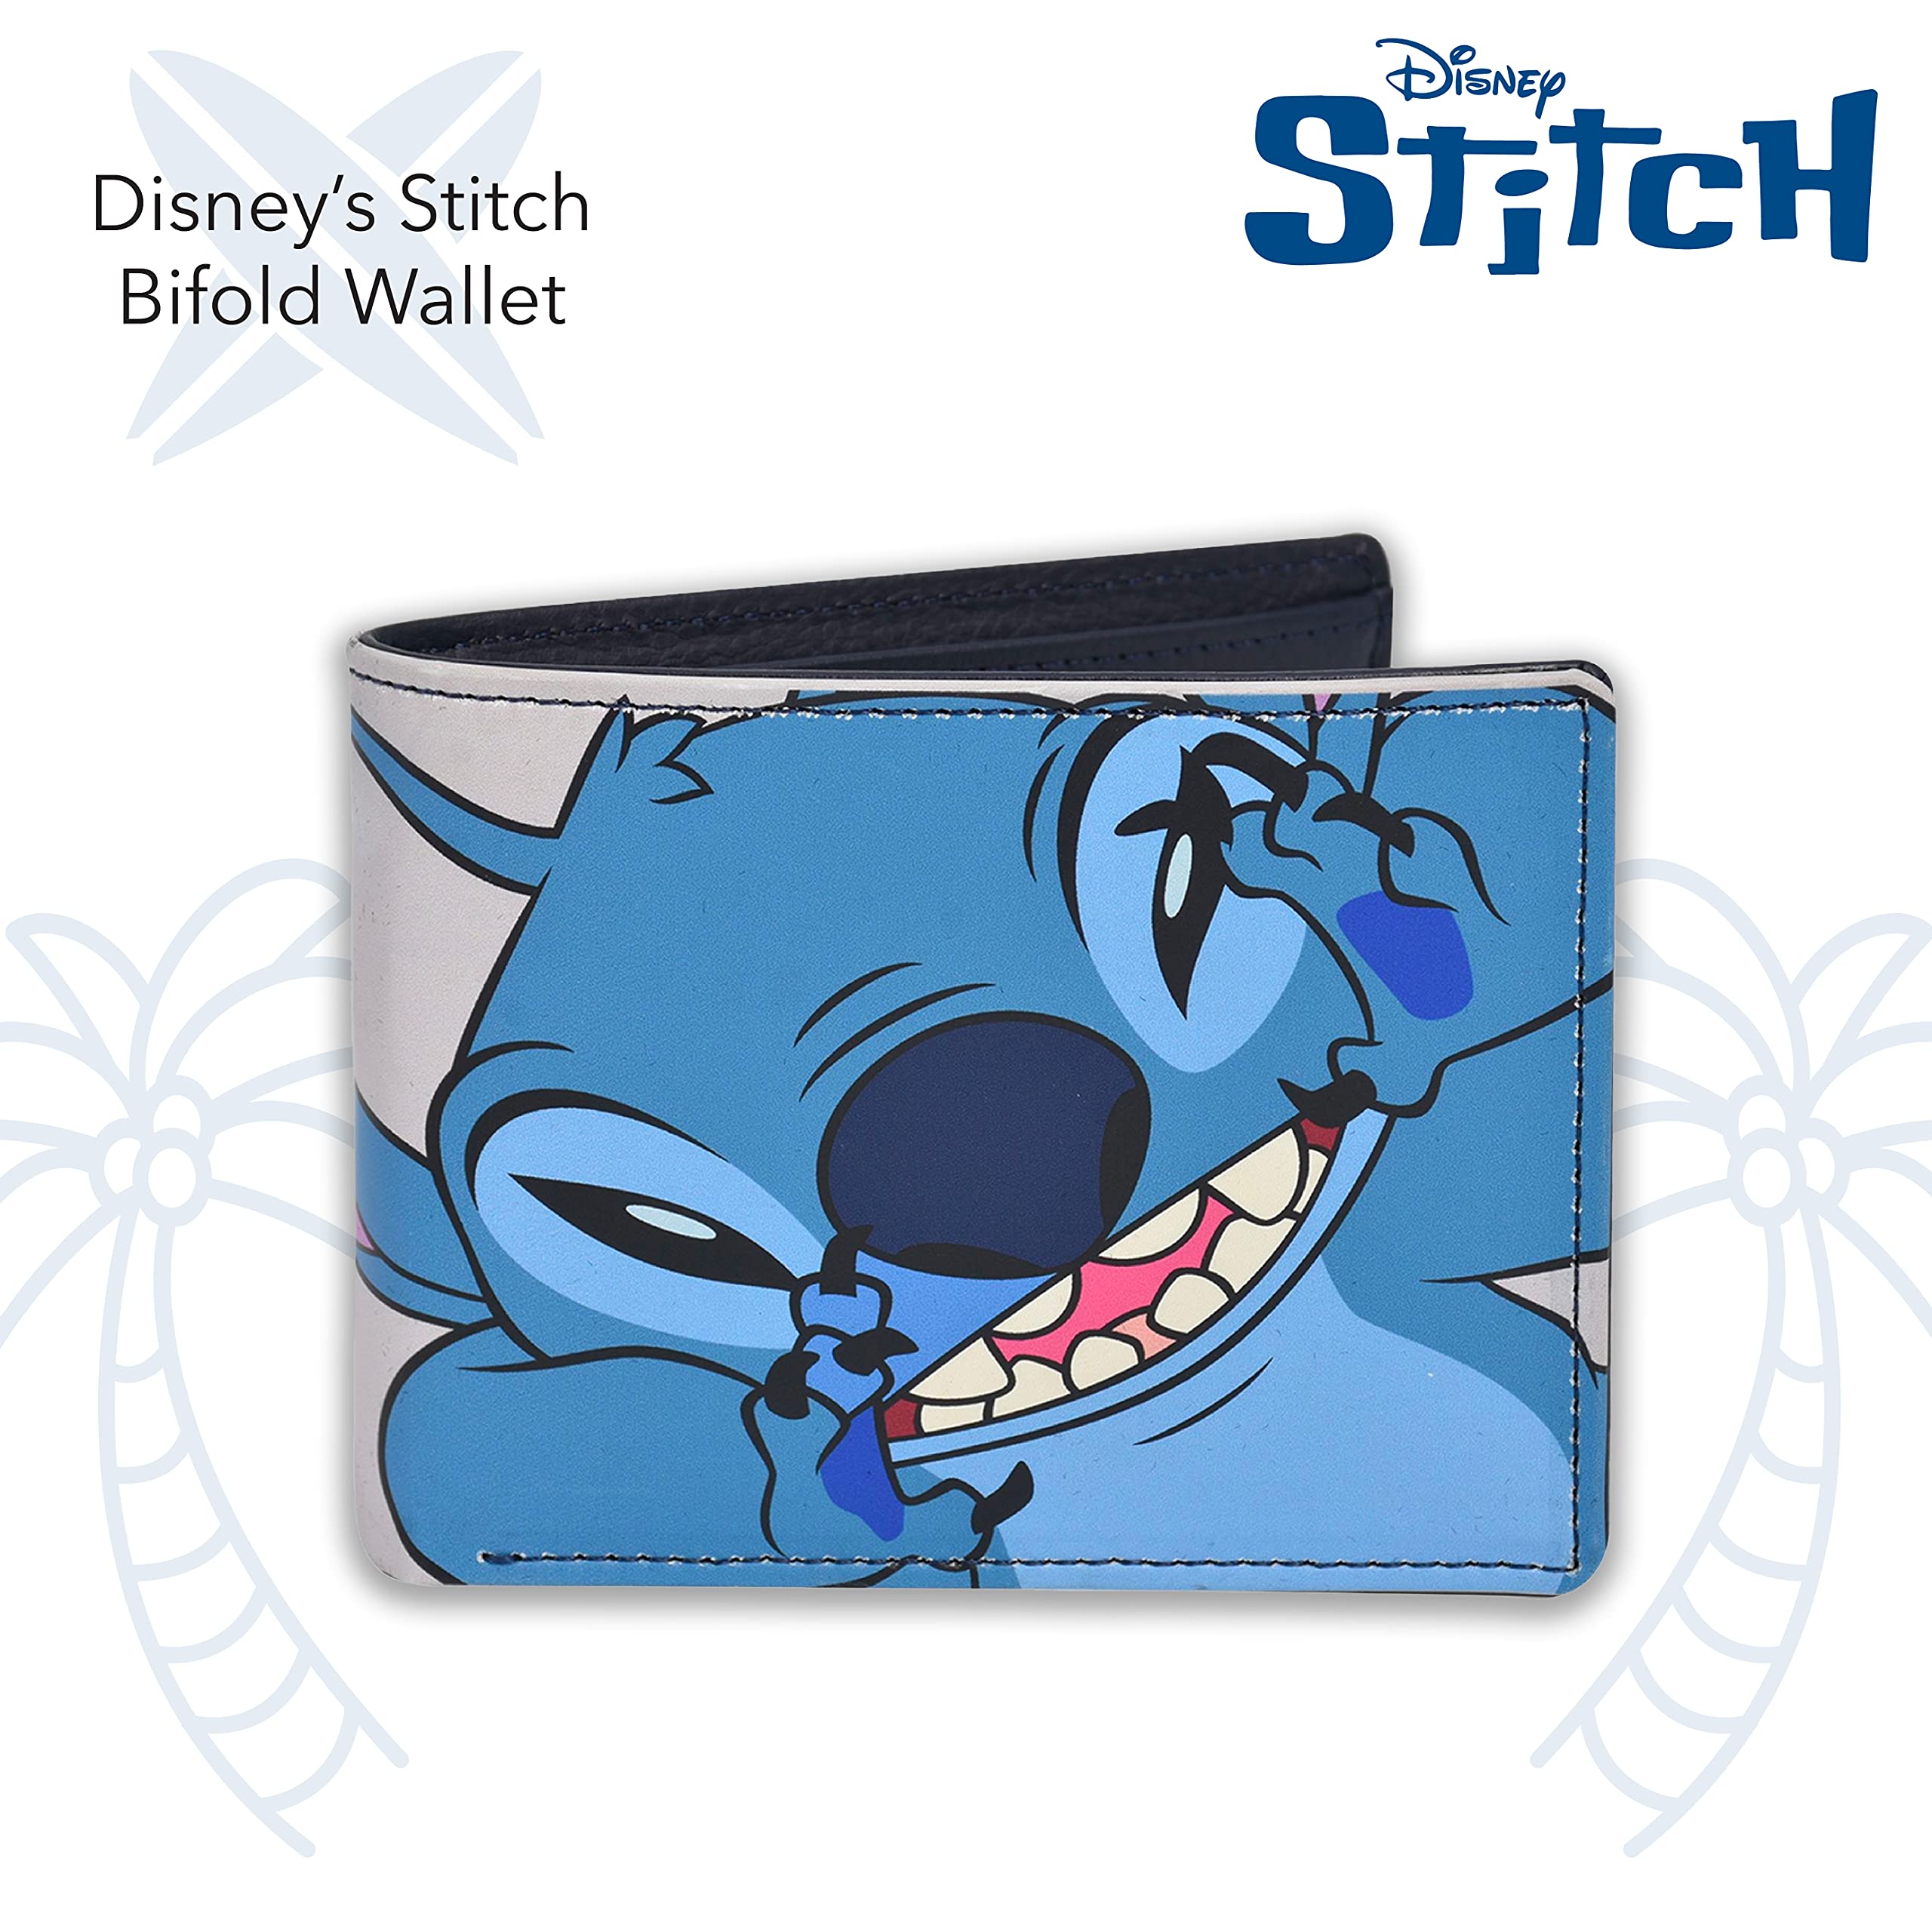 Disney's Stitch Bifold Wallet in a Decorative Tin Case, Multi